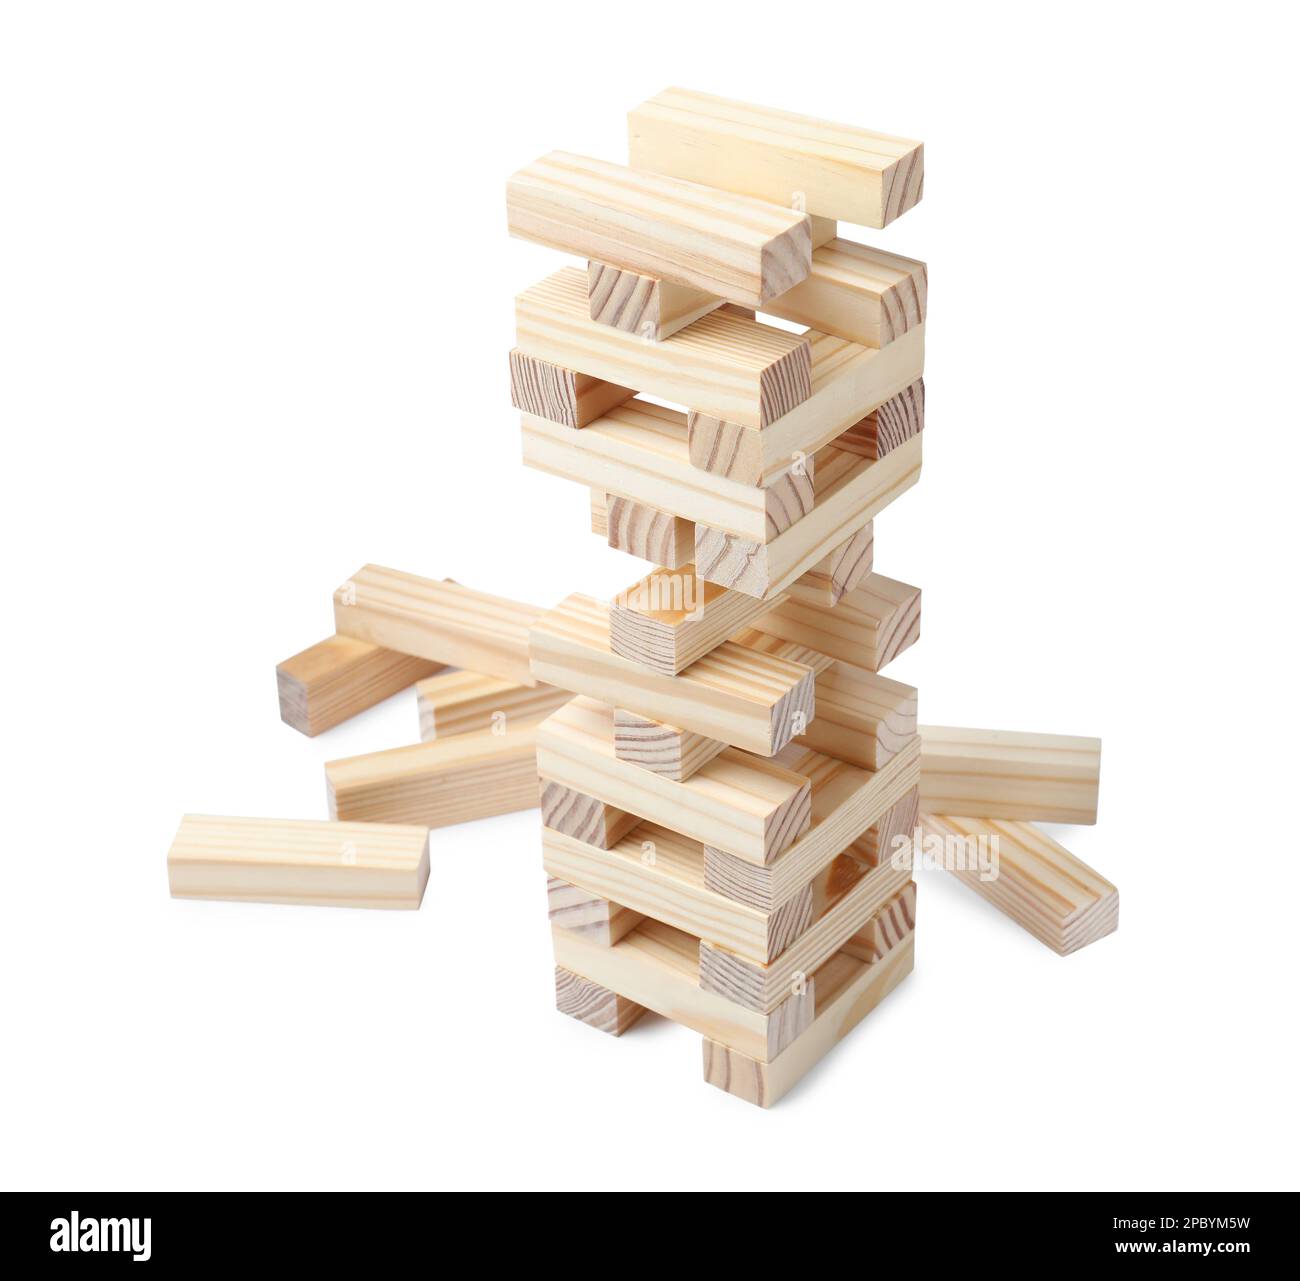 Jenga tower made of wooden blocks on white background Stock Photo